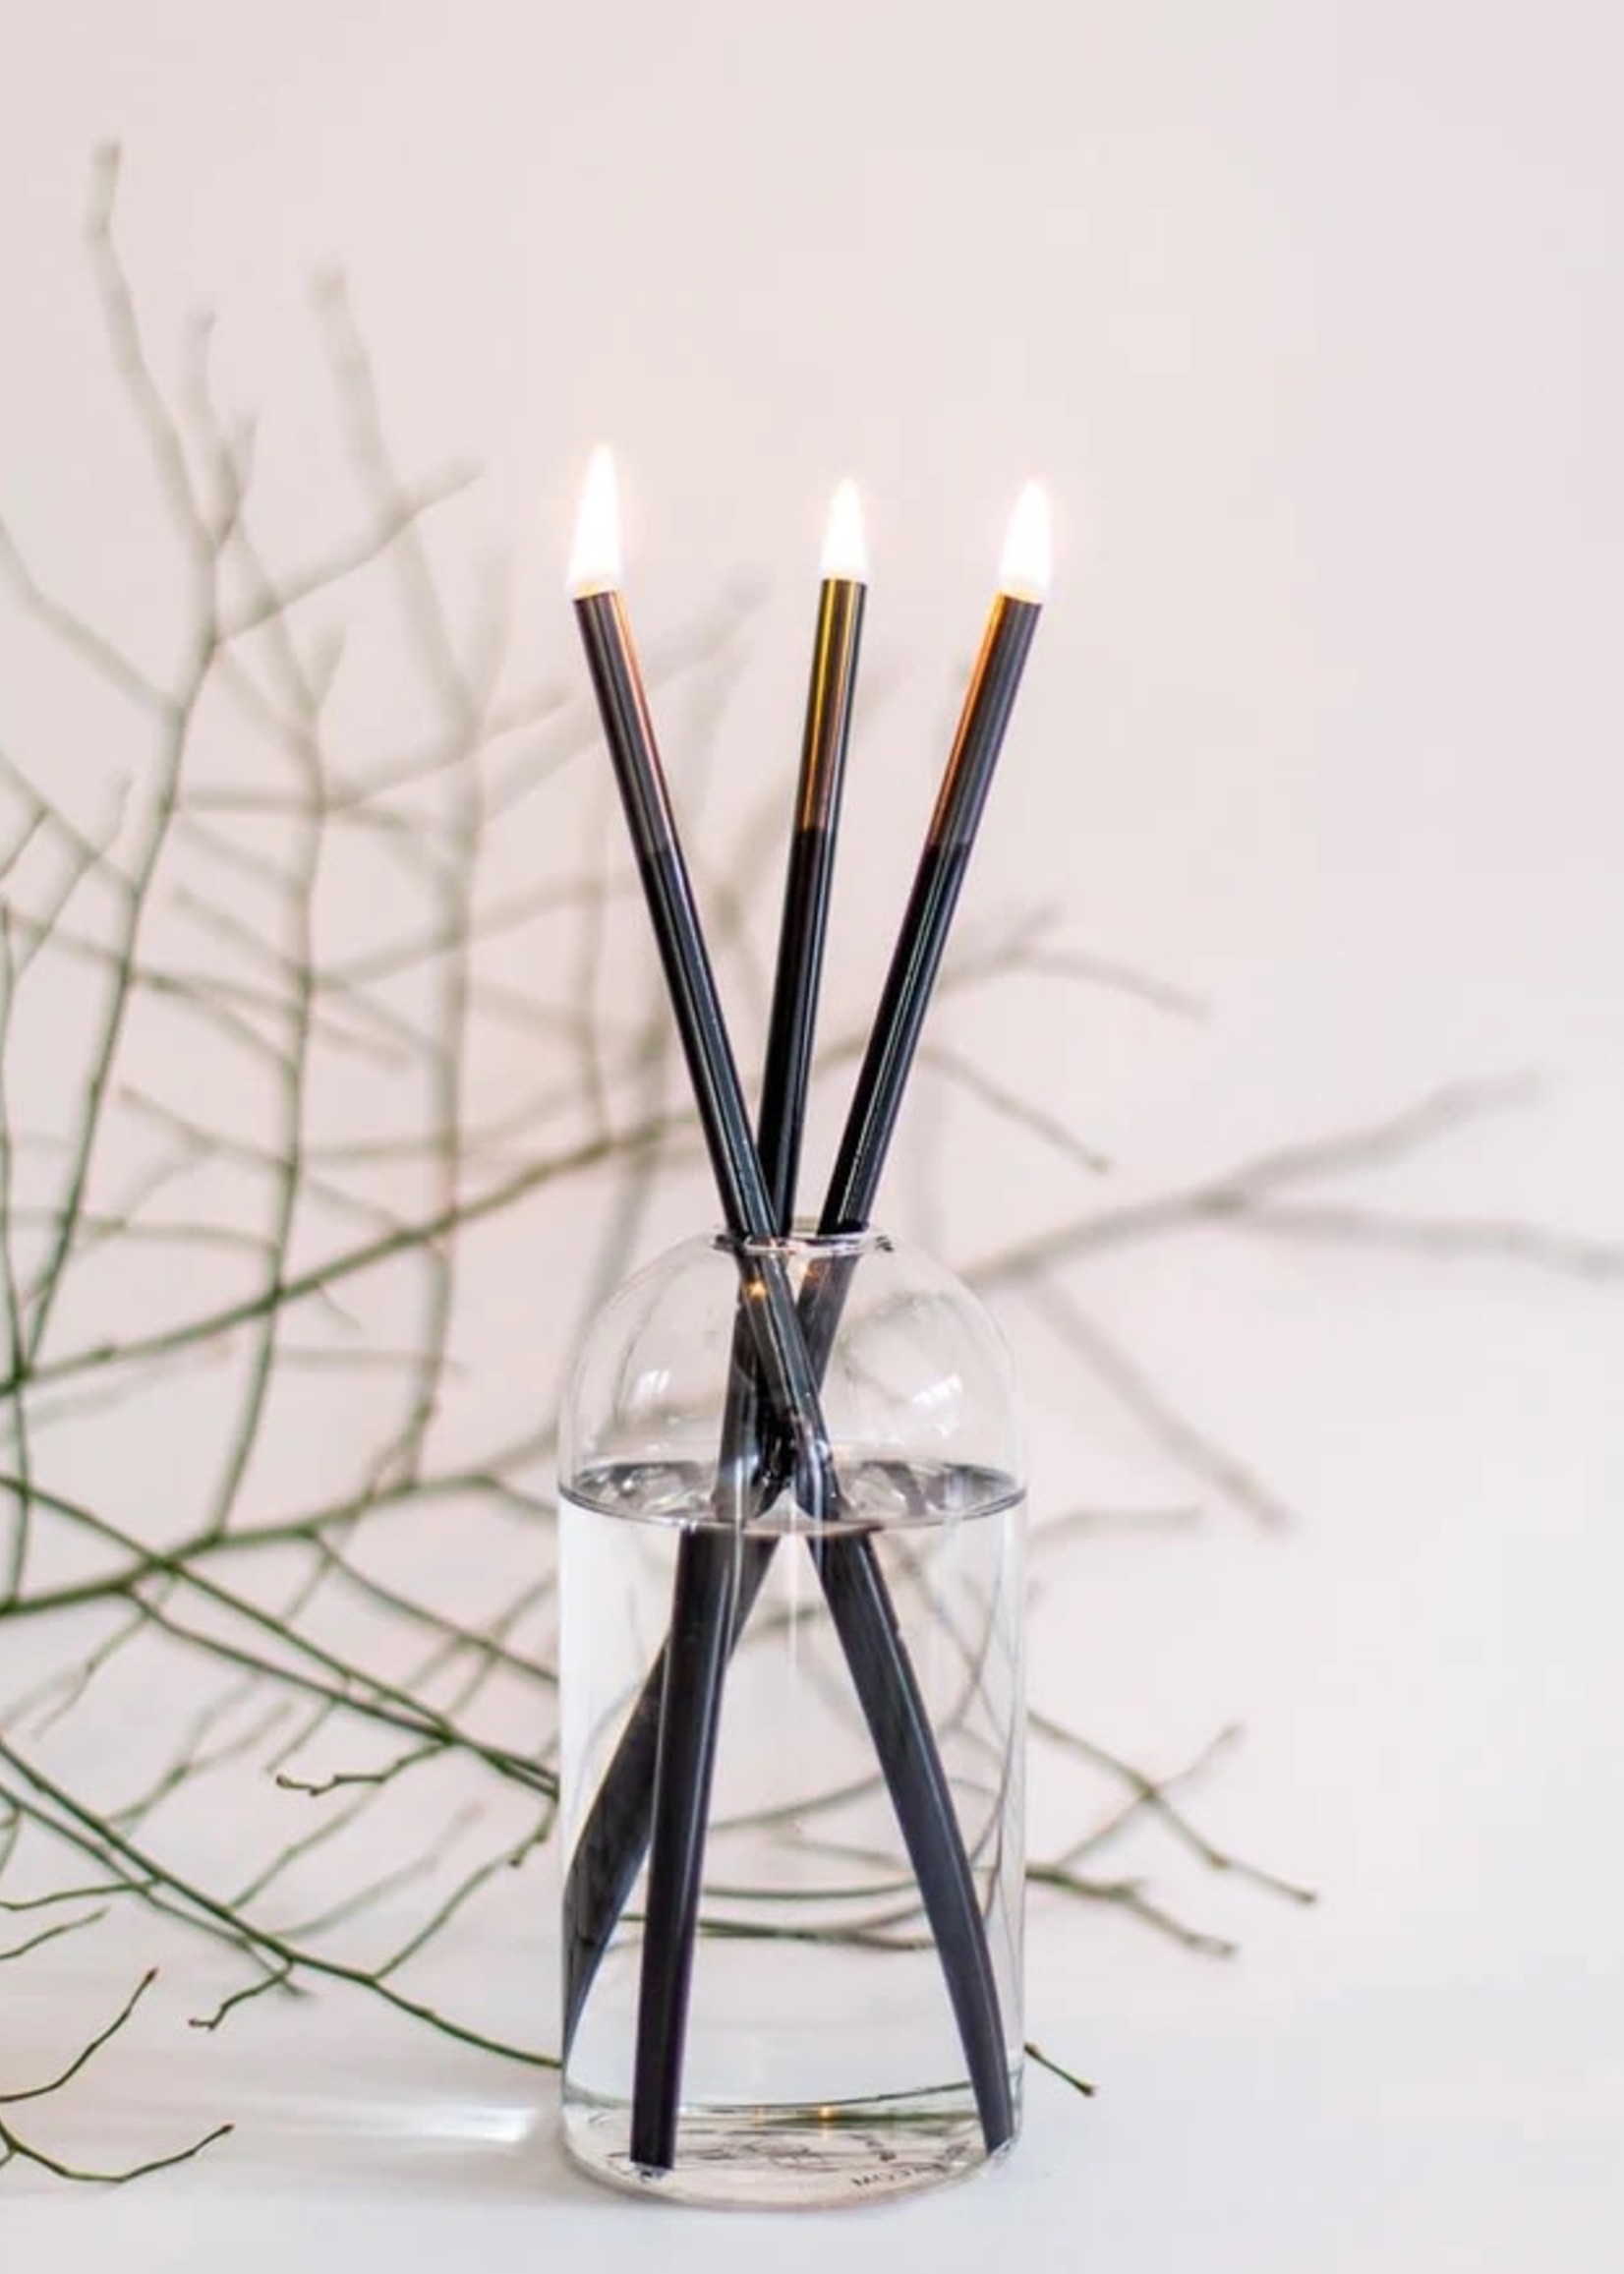 Everlasting Candle Co. Black Everlasting Candlesticks